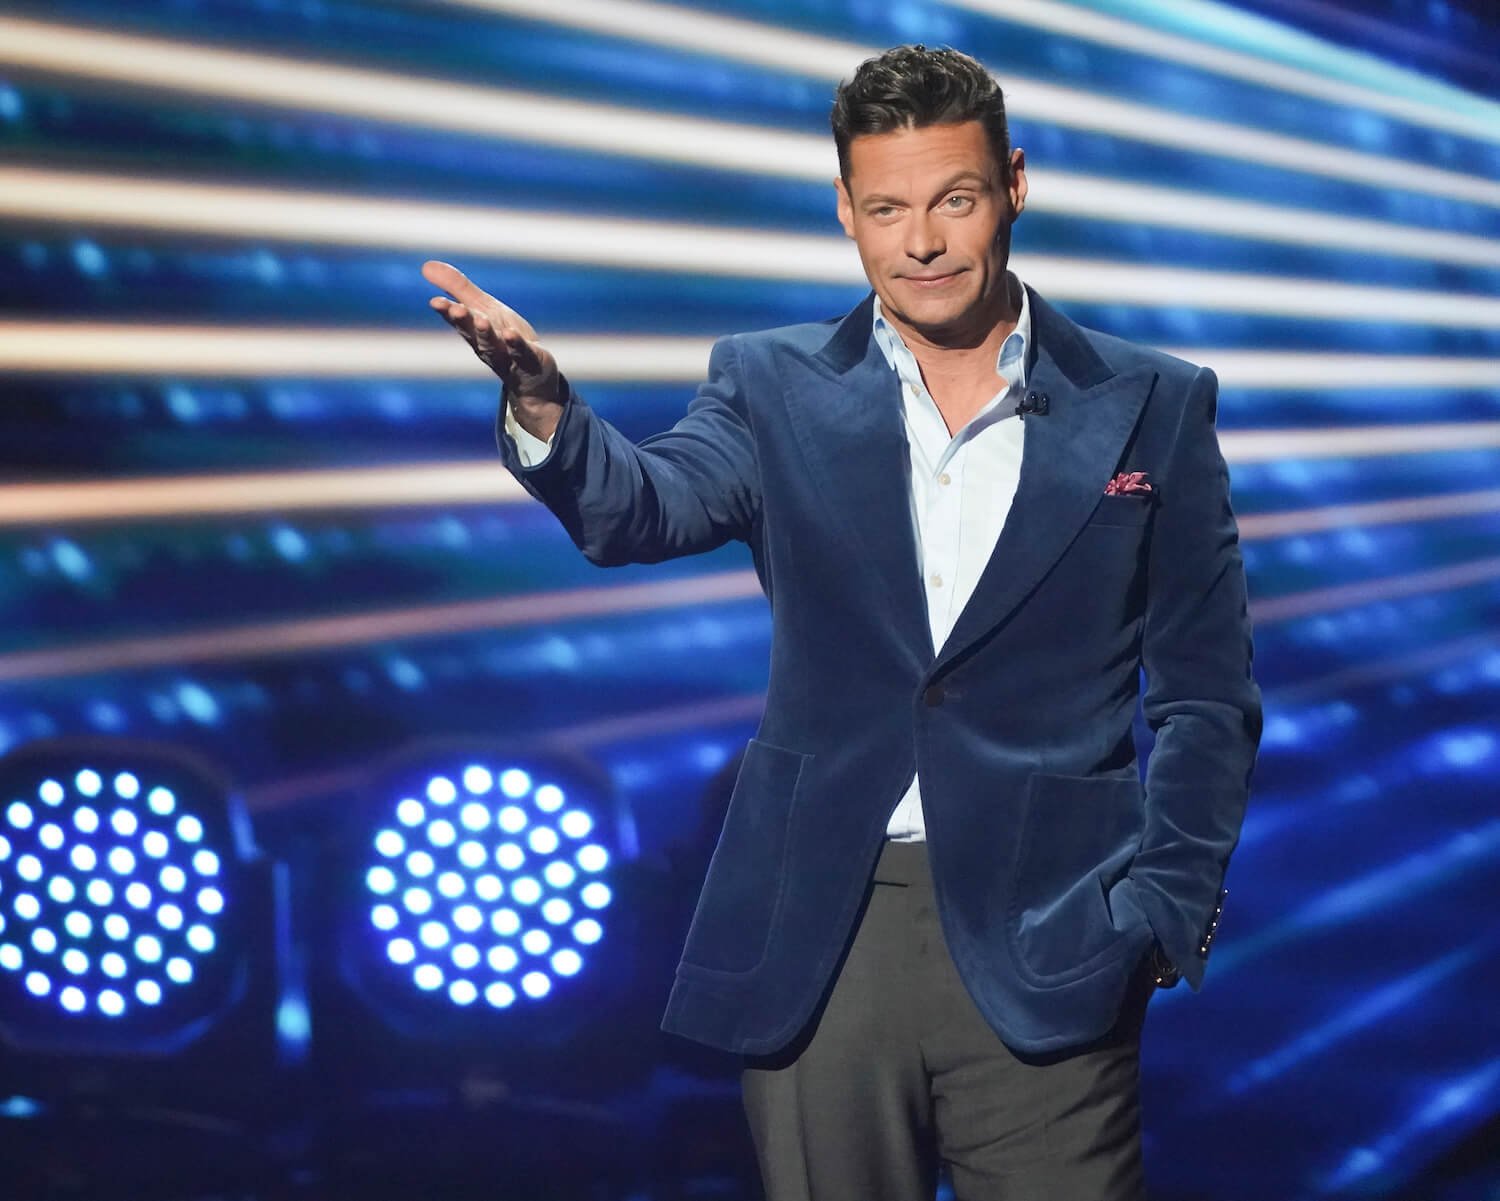 The new 'Wheel of Fortune' host, Ryan Seacrest, on 'American Idol'